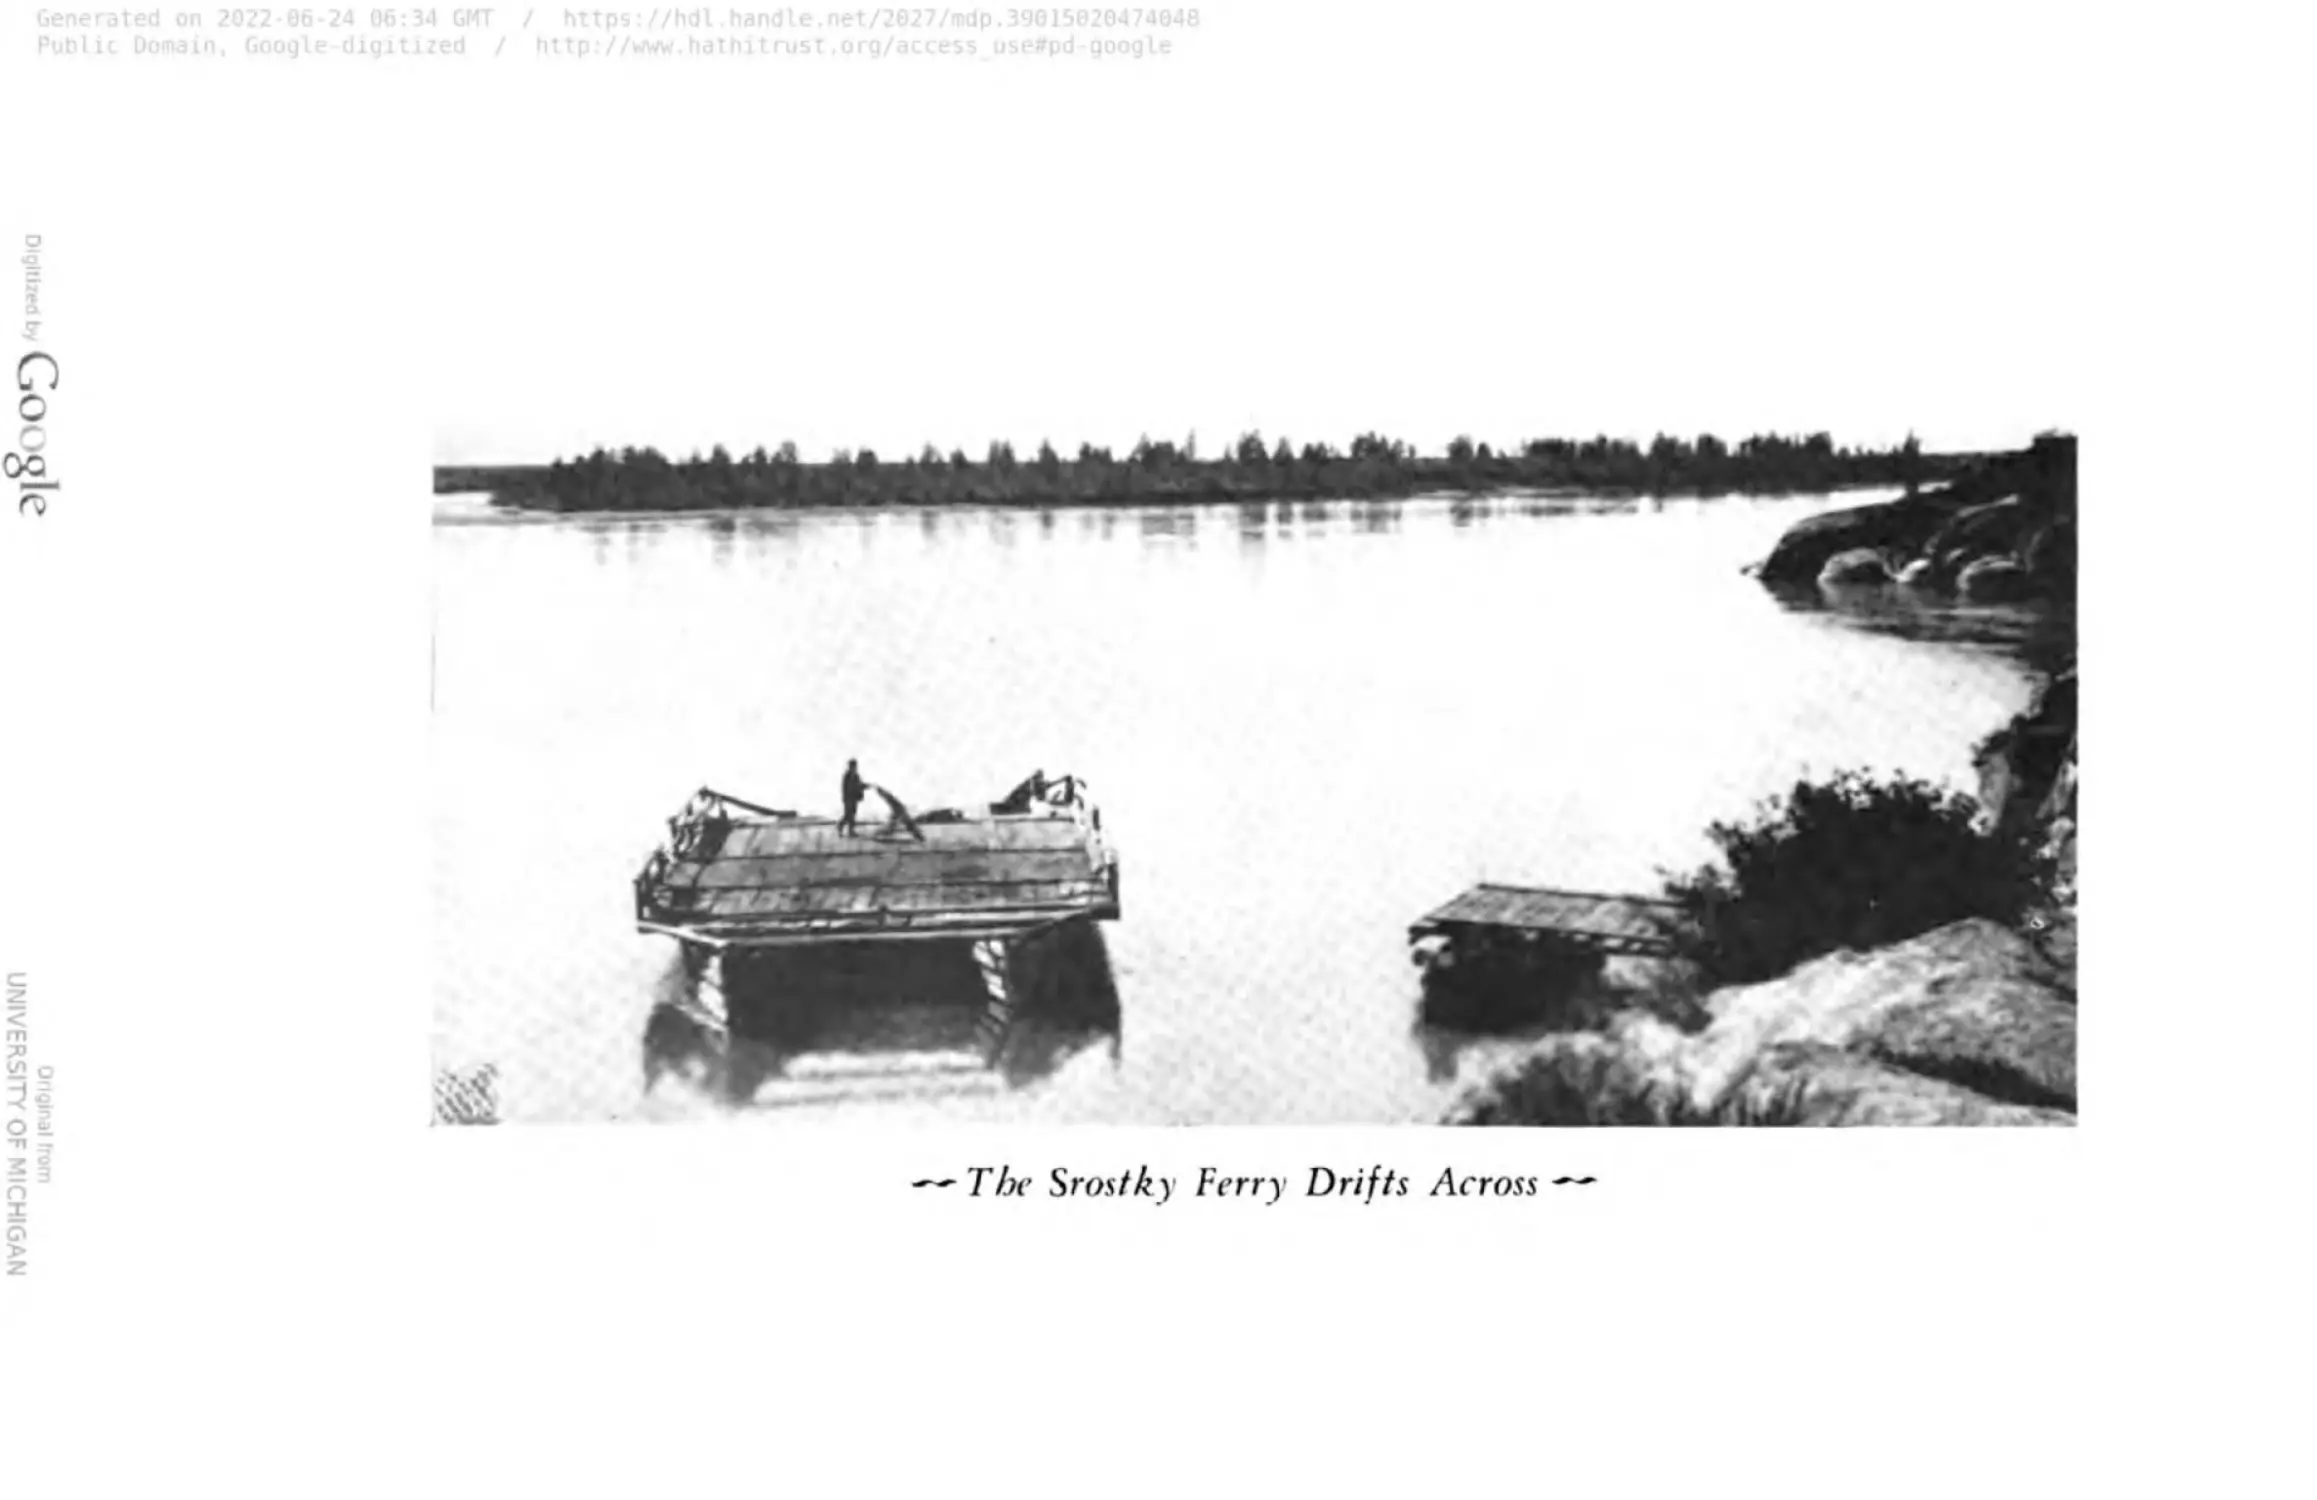 The Srostky Ferry Drifts Across